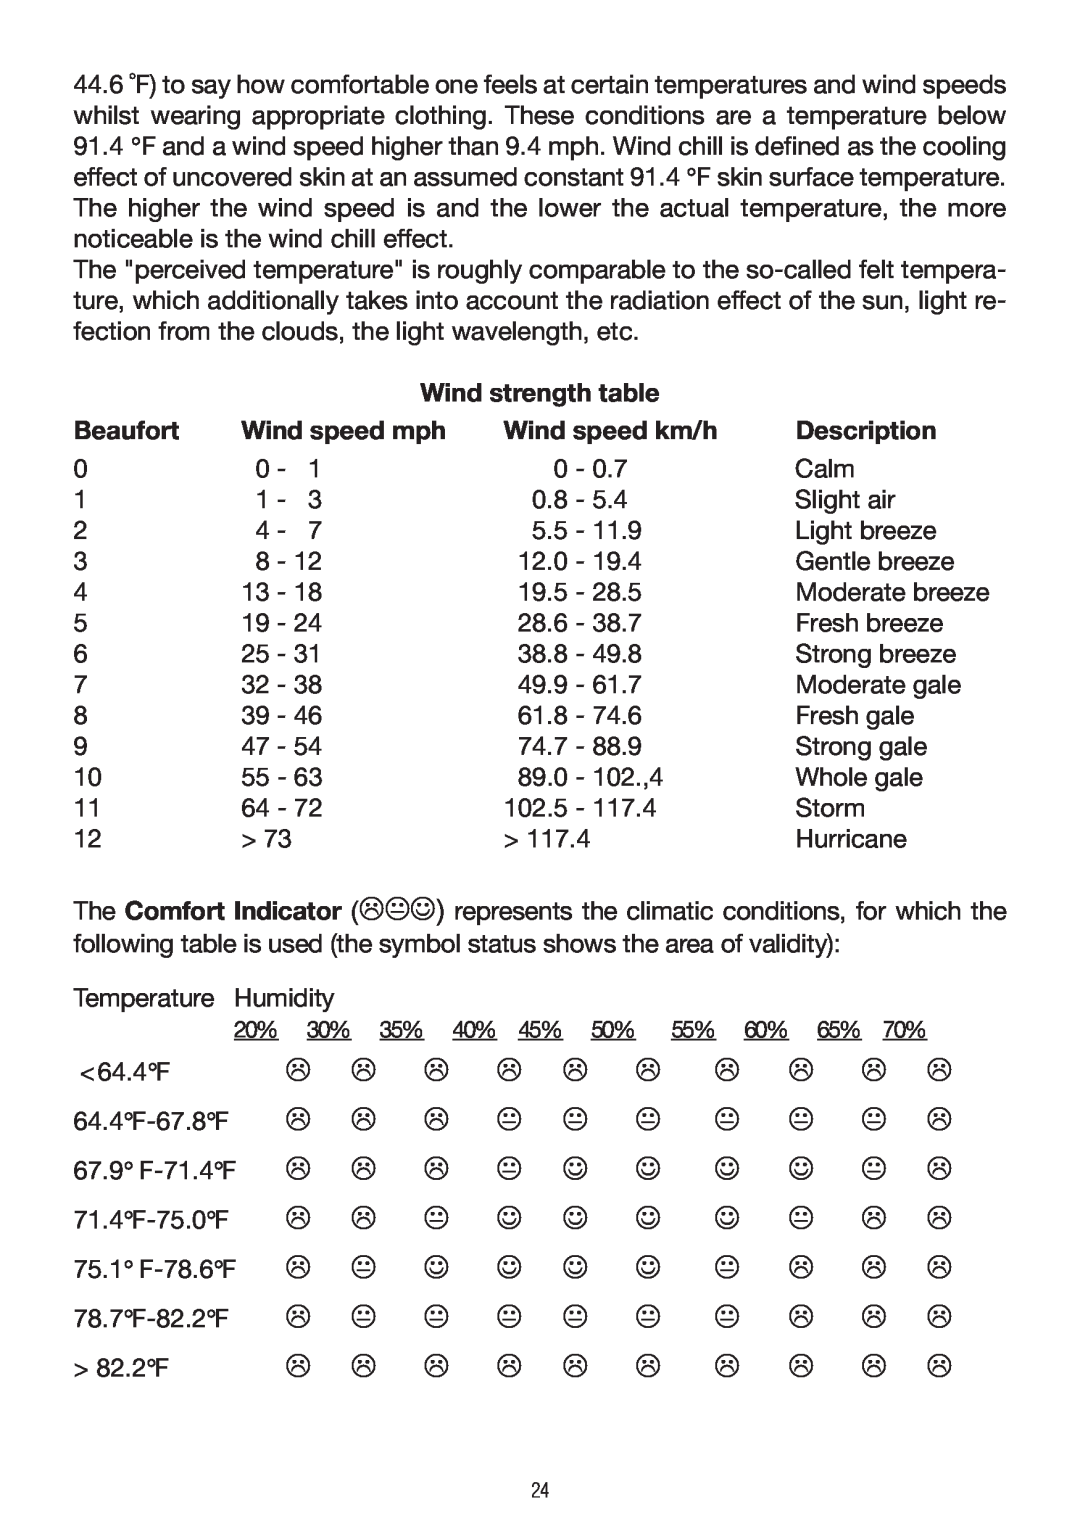 P3 International E 9300 operating instructions Wind strength table, Beaufort, Wind speed mph, Wind speed km/h, Description 